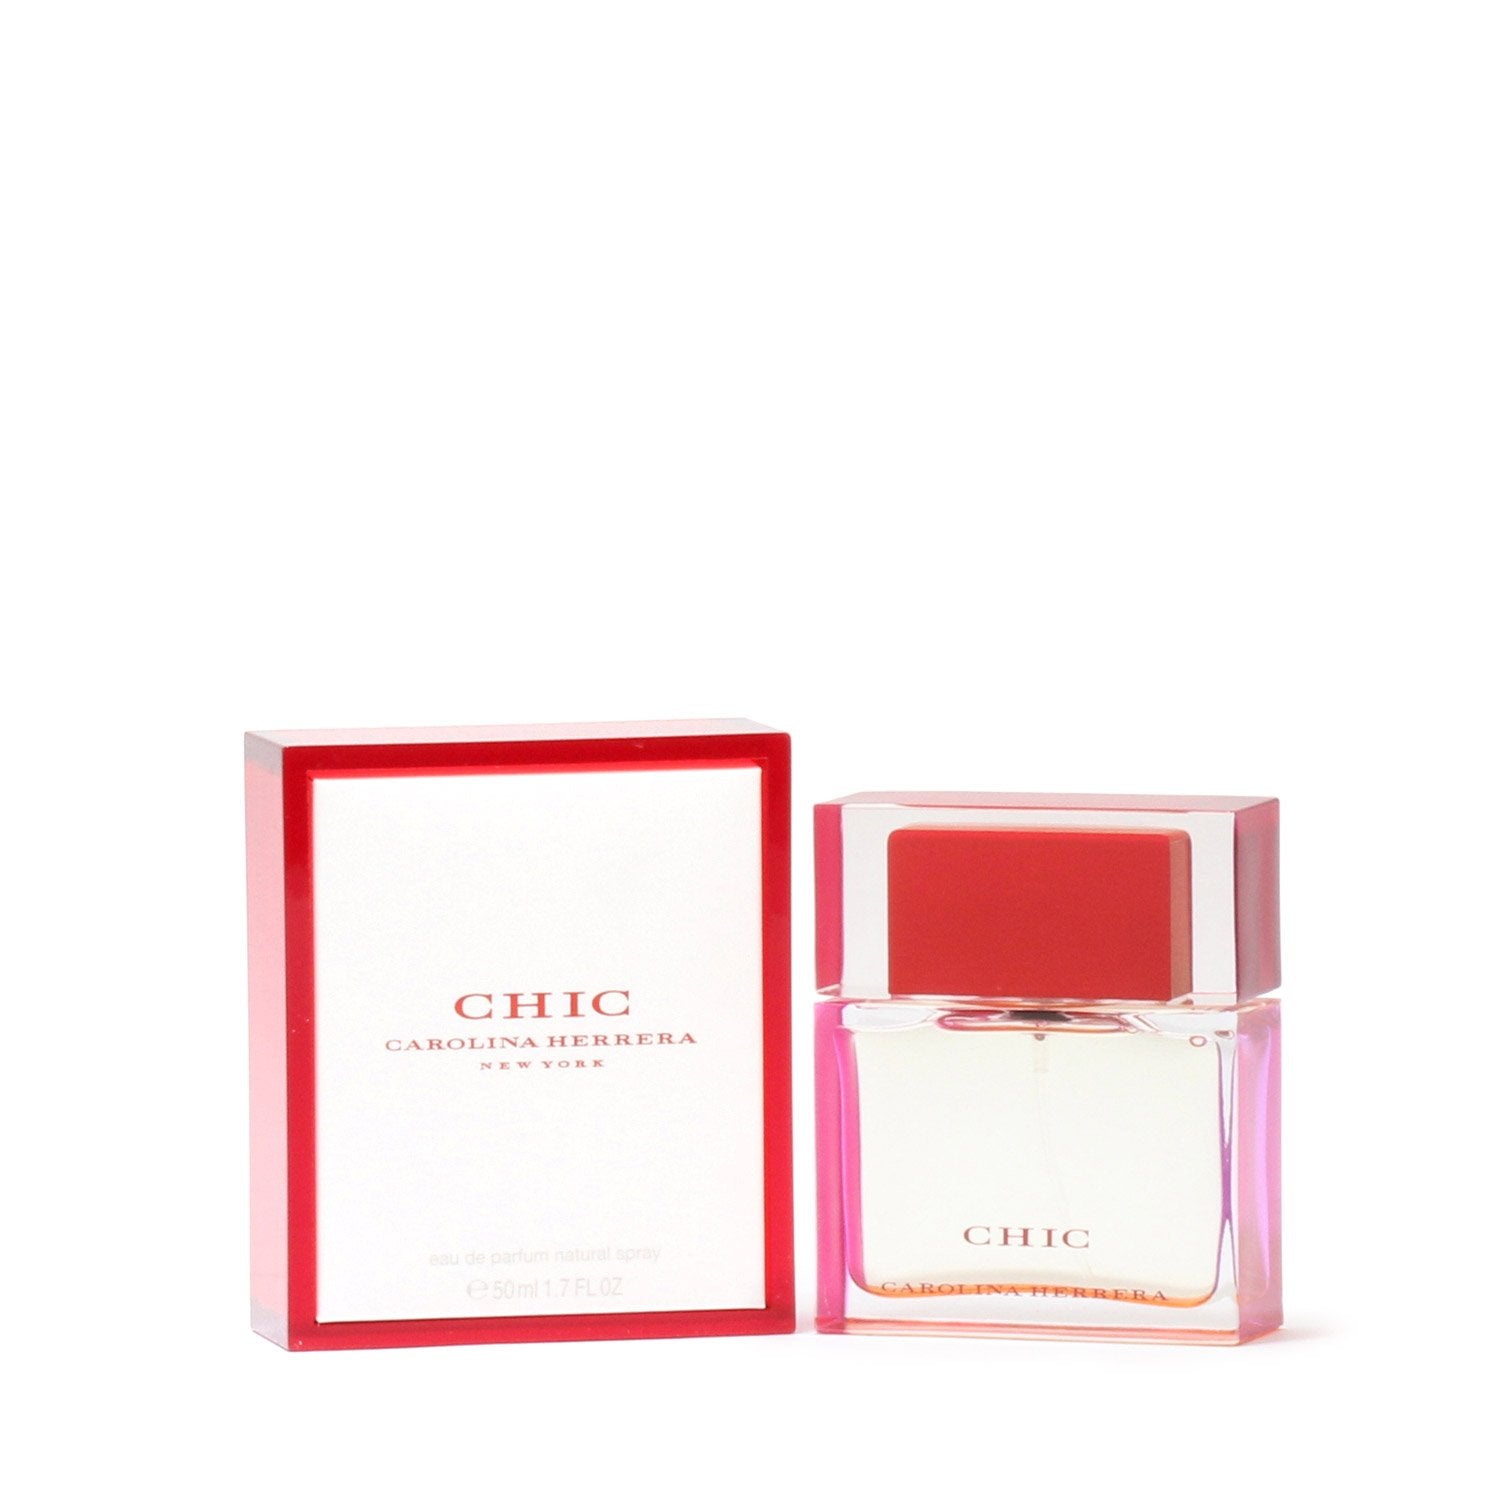 Perfume - CHIC FOR WOMEN BY CAROLINA HERRERA - EAU DE PARFUM SPRAY